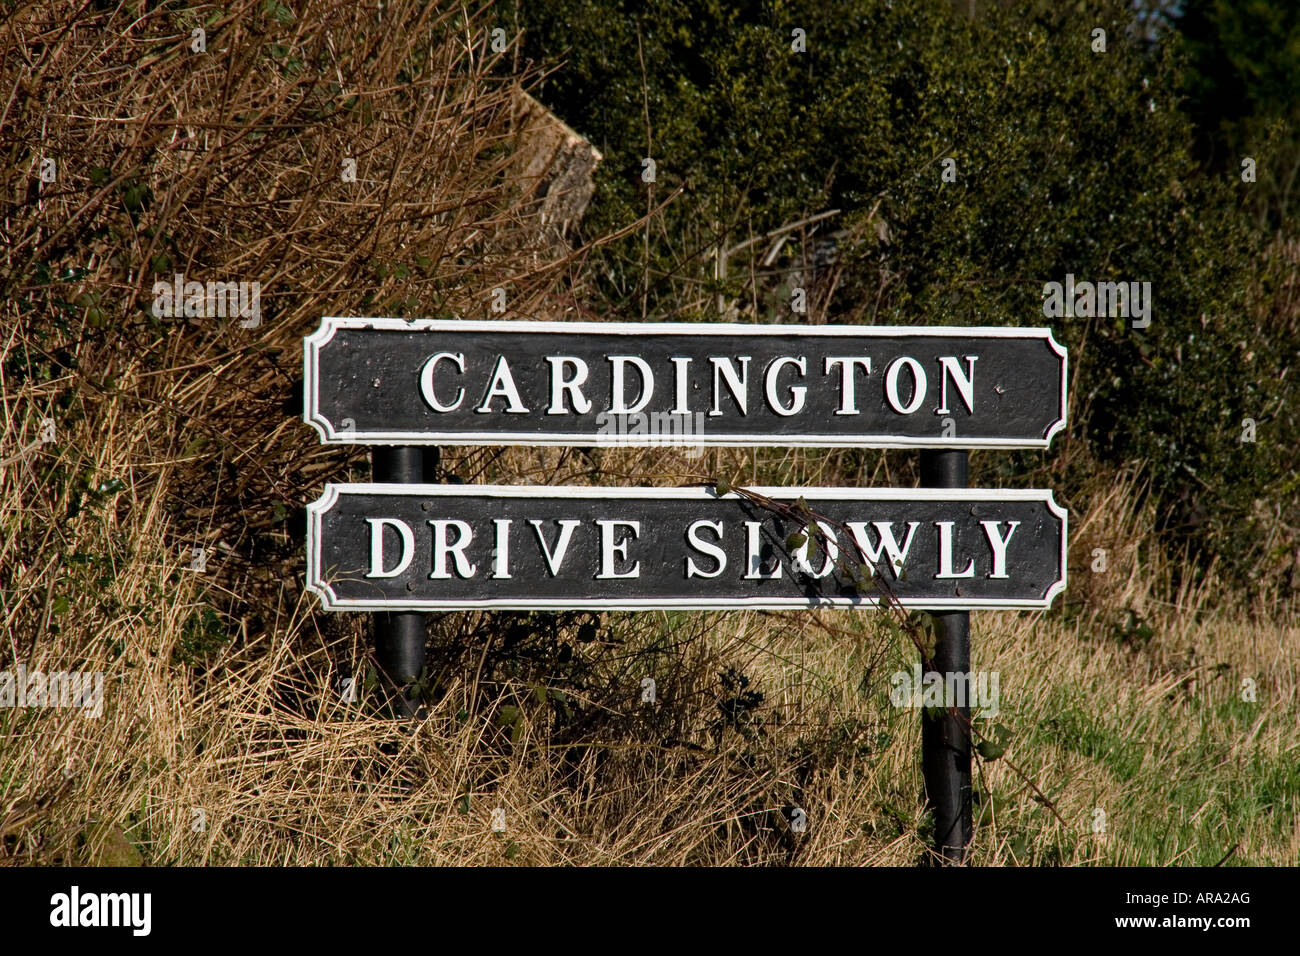 Cardington Drive Slowly gateway sign, Cardington, Shropshire Stock Photo